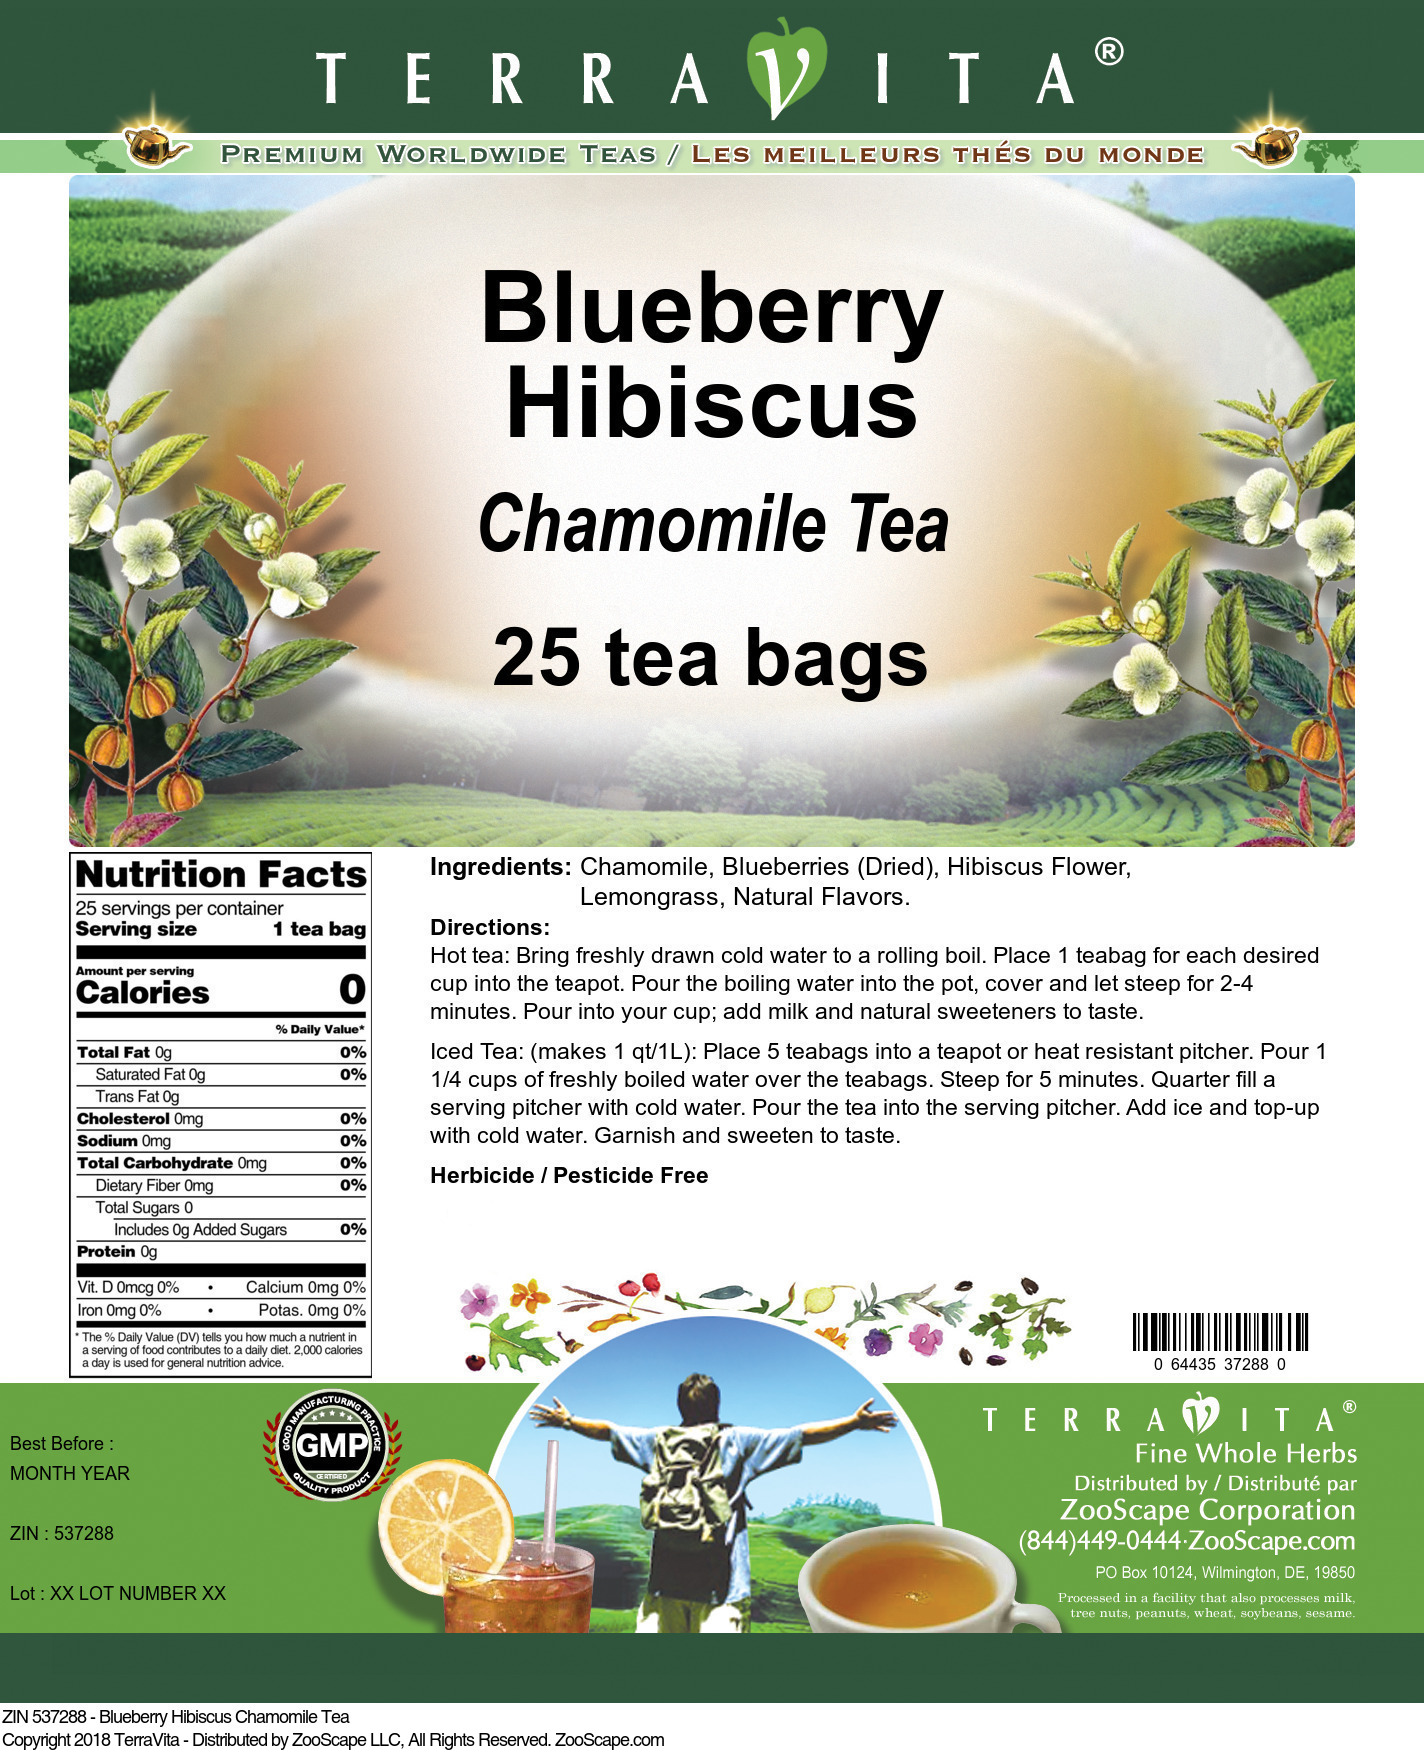 Blueberry Hibiscus Chamomile Tea - Label